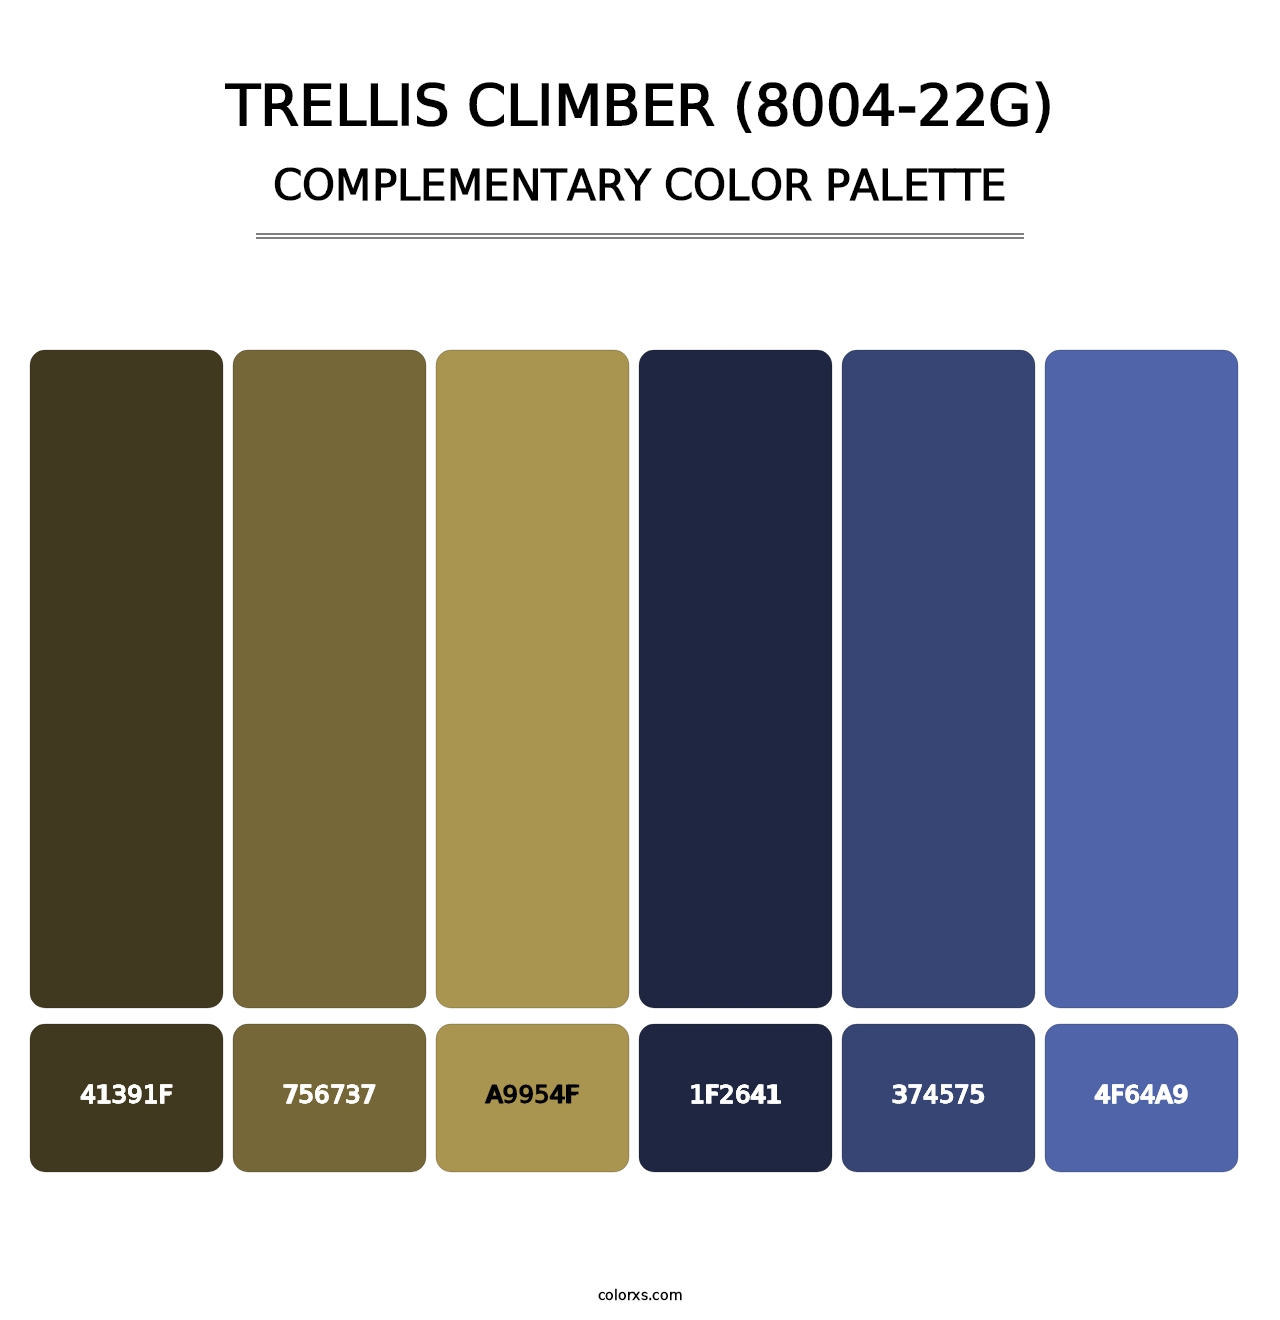 Trellis Climber (8004-22G) - Complementary Color Palette